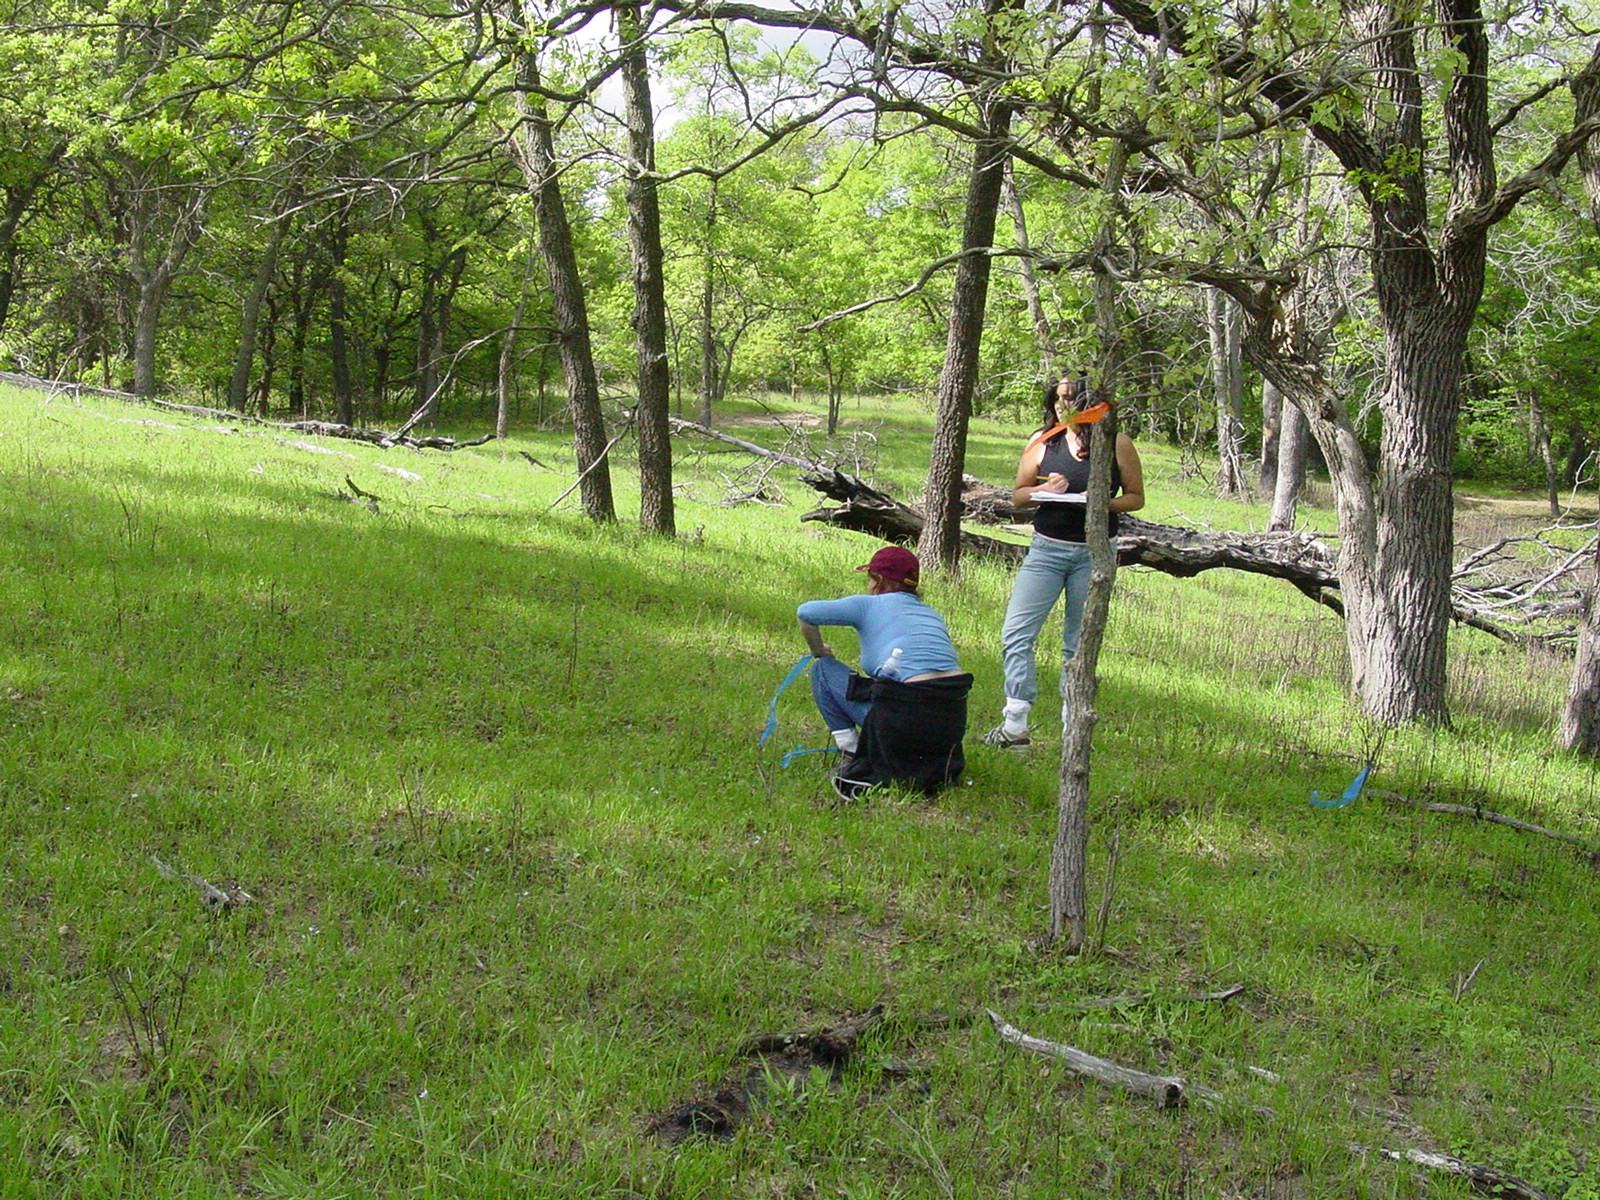 Surveying regrown vegetation after an experimental burn.